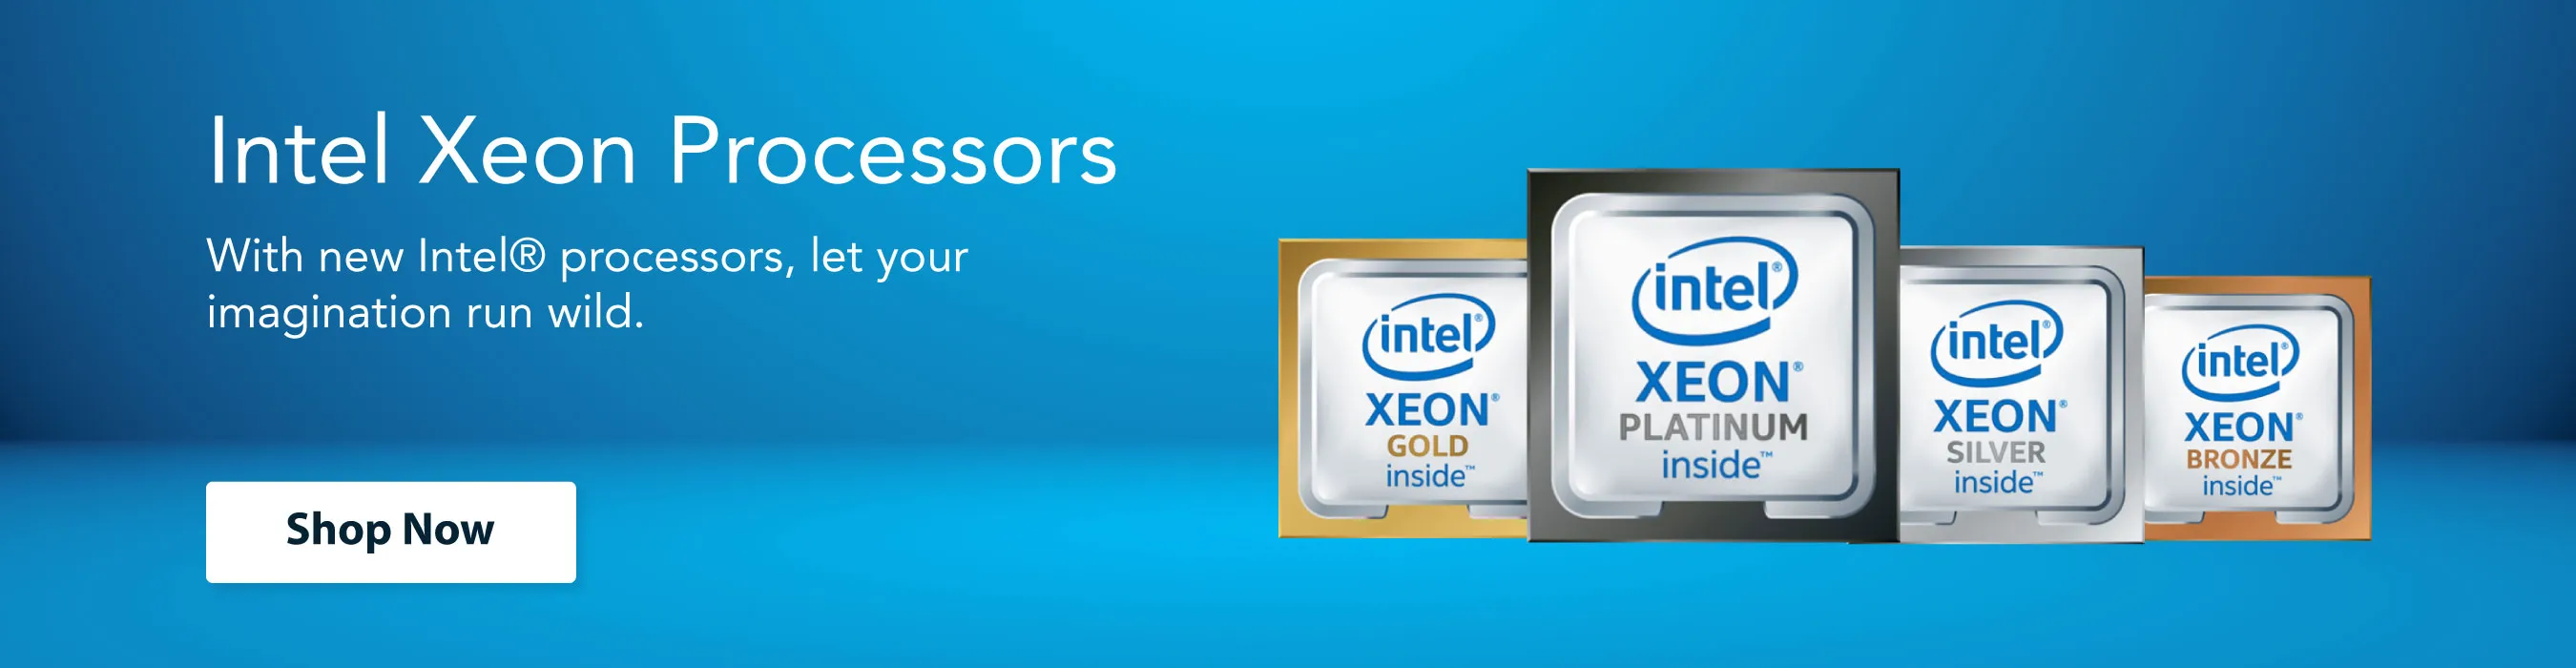 Intel Xeon Processor Banner